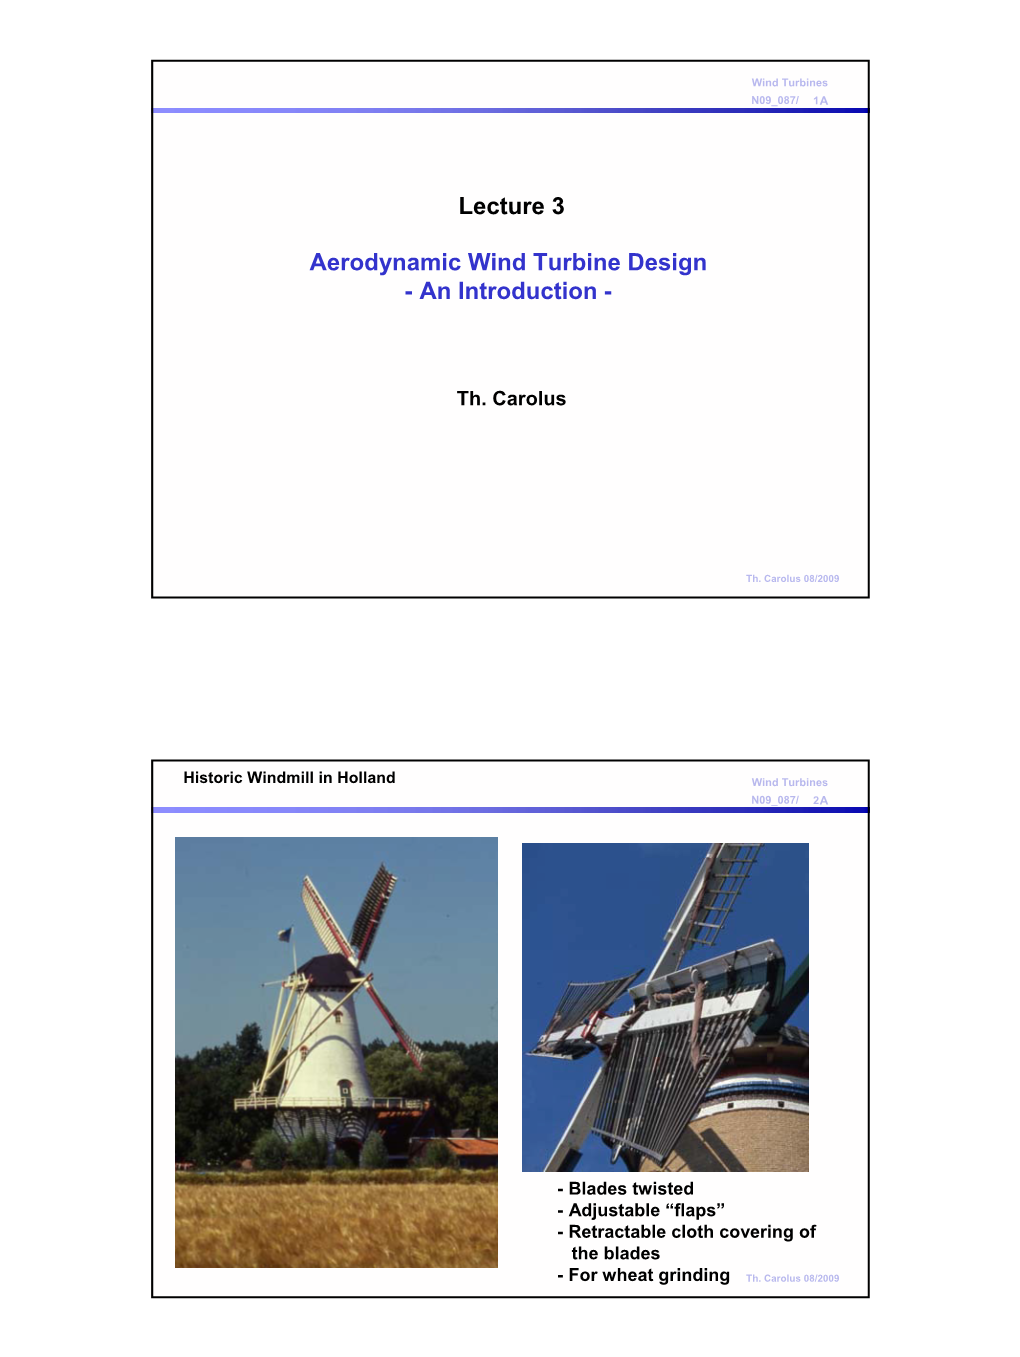 Lecture 3 Aerodynamic Wind Turbine Design